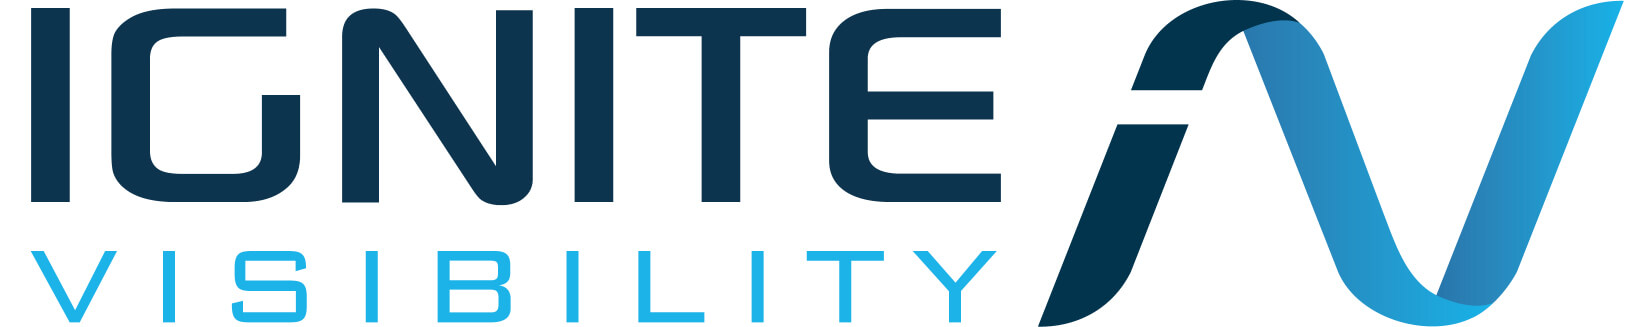 Top Real Estate SEO Business Logo: Ignite Visibility